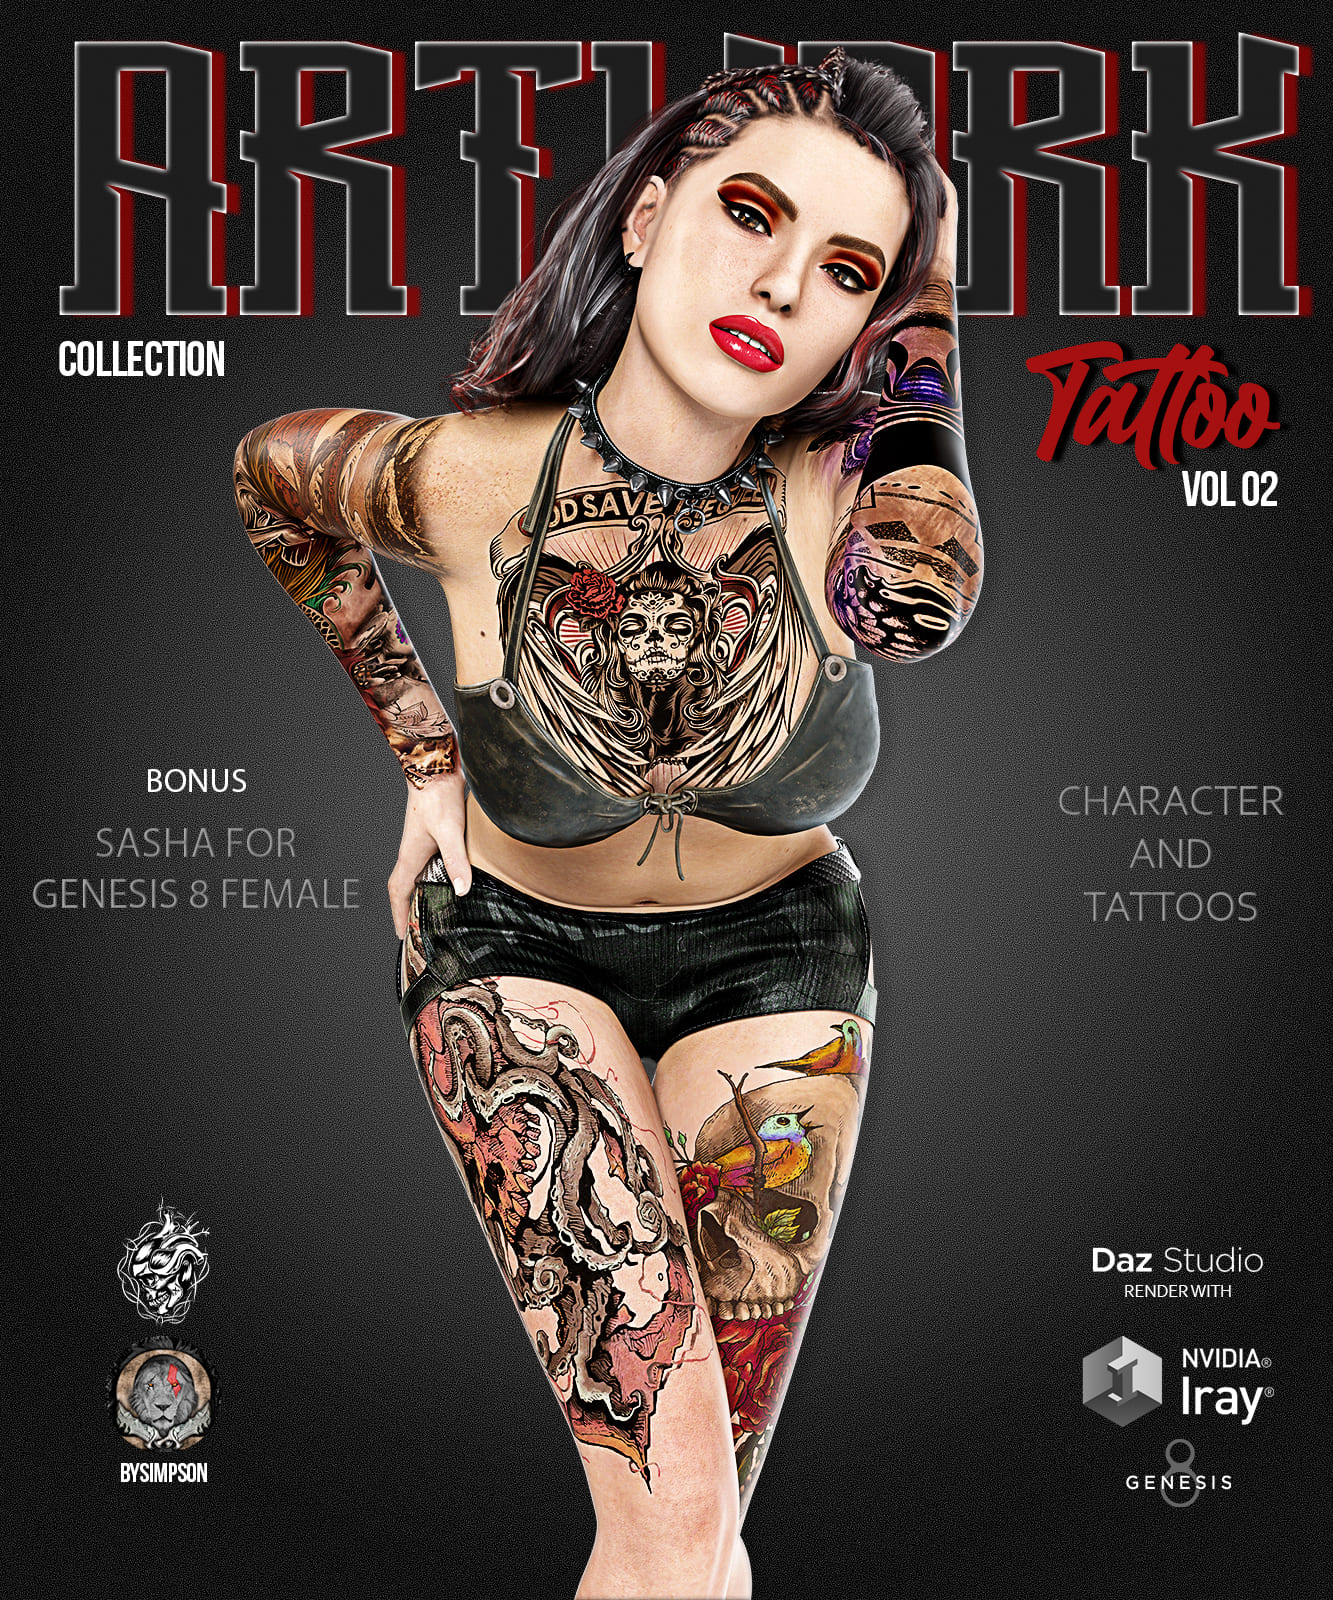 Artwork Tattoo Collection Vol 02 and Sasha for Genesis 8 Female_DAZ3DDL